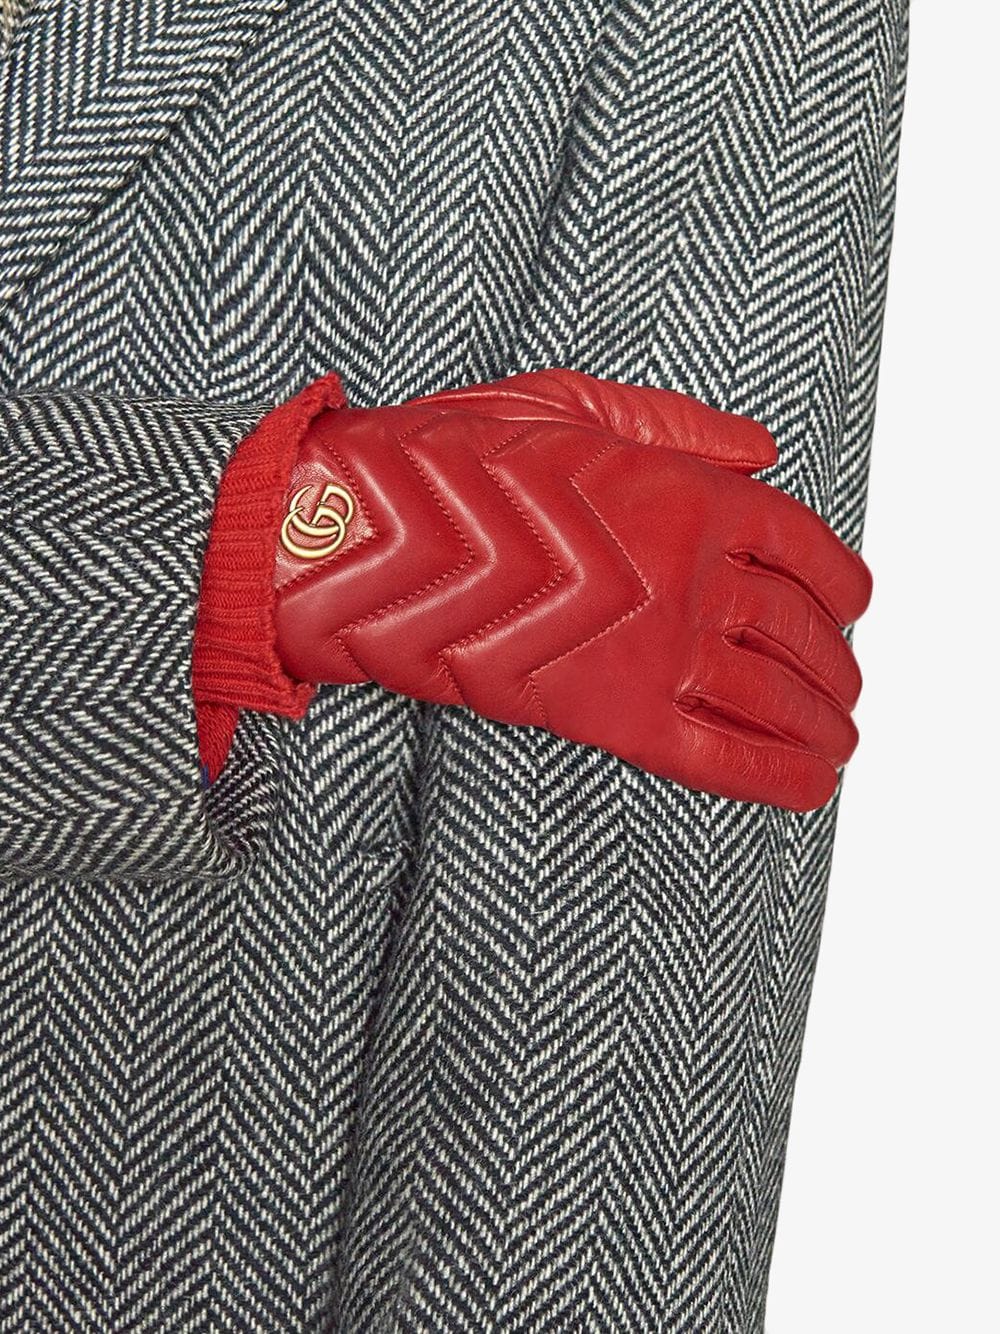 фото Gucci перчатки gg marmont с узором шеврон